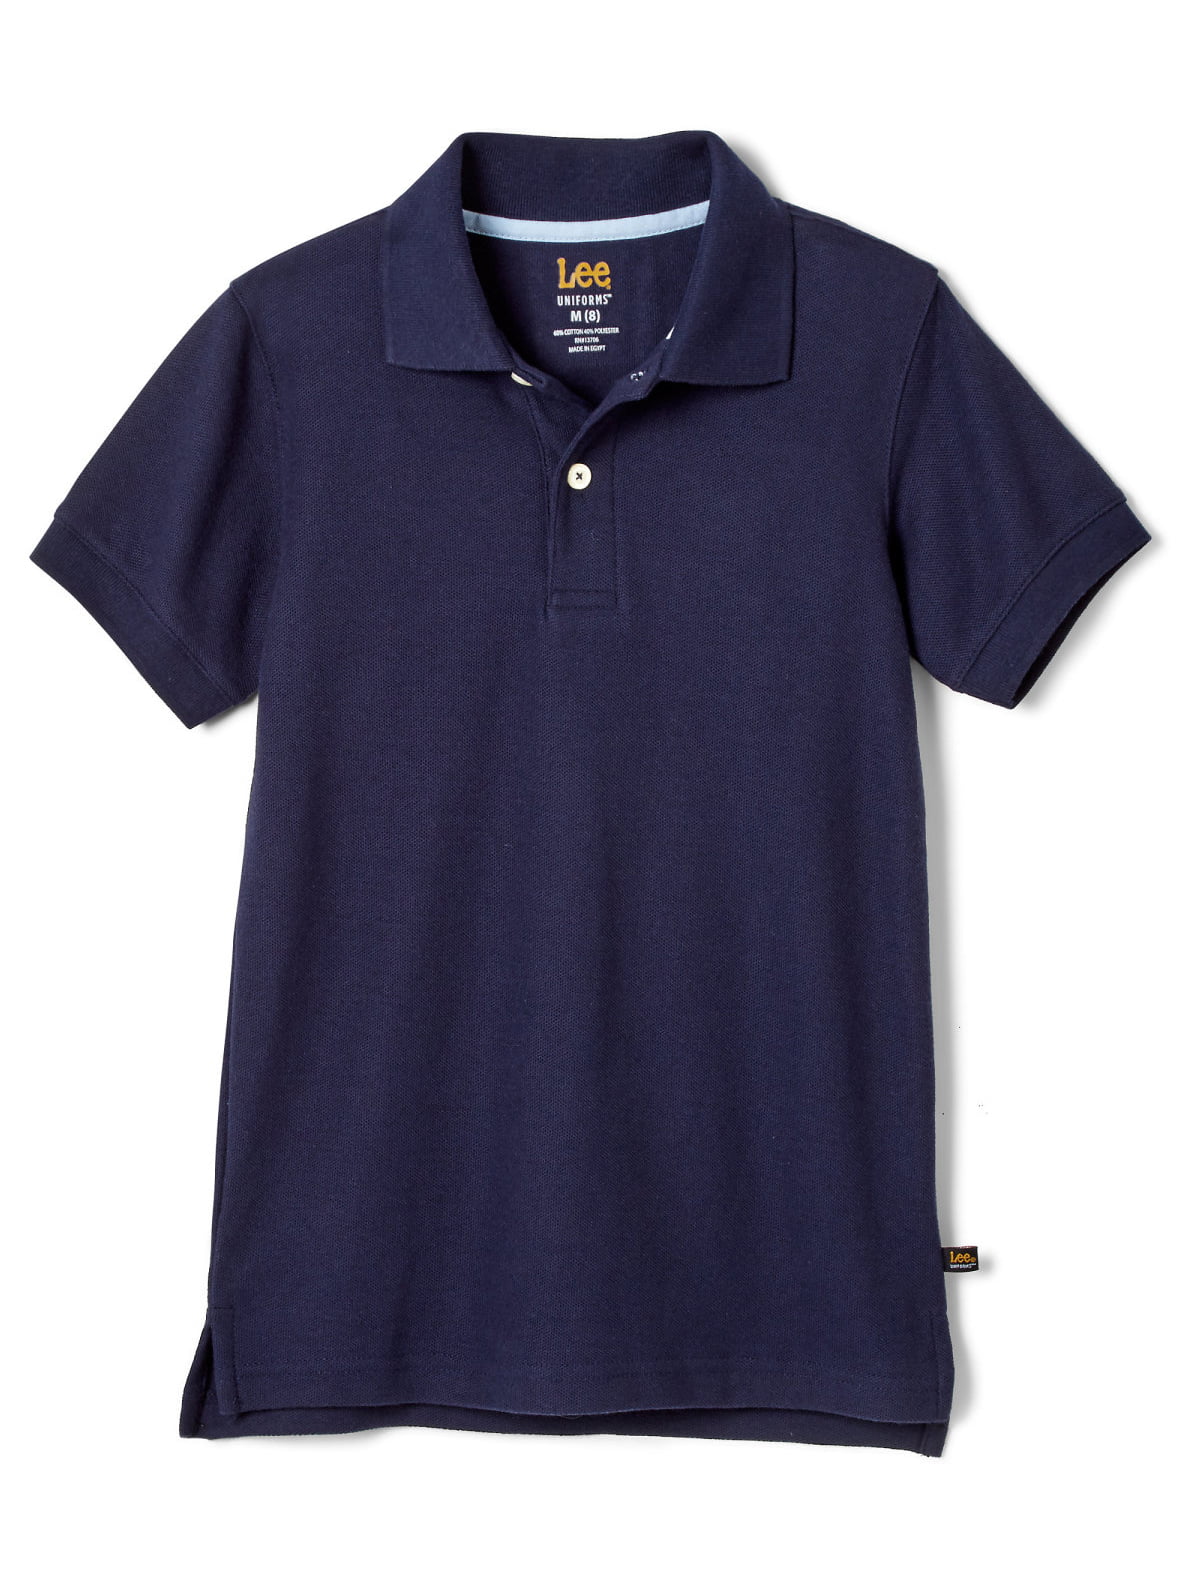 Details about   Boy's 4-7X Dockers Pique Polo Shirt Regular Fit Short Sleeve School Uniform 